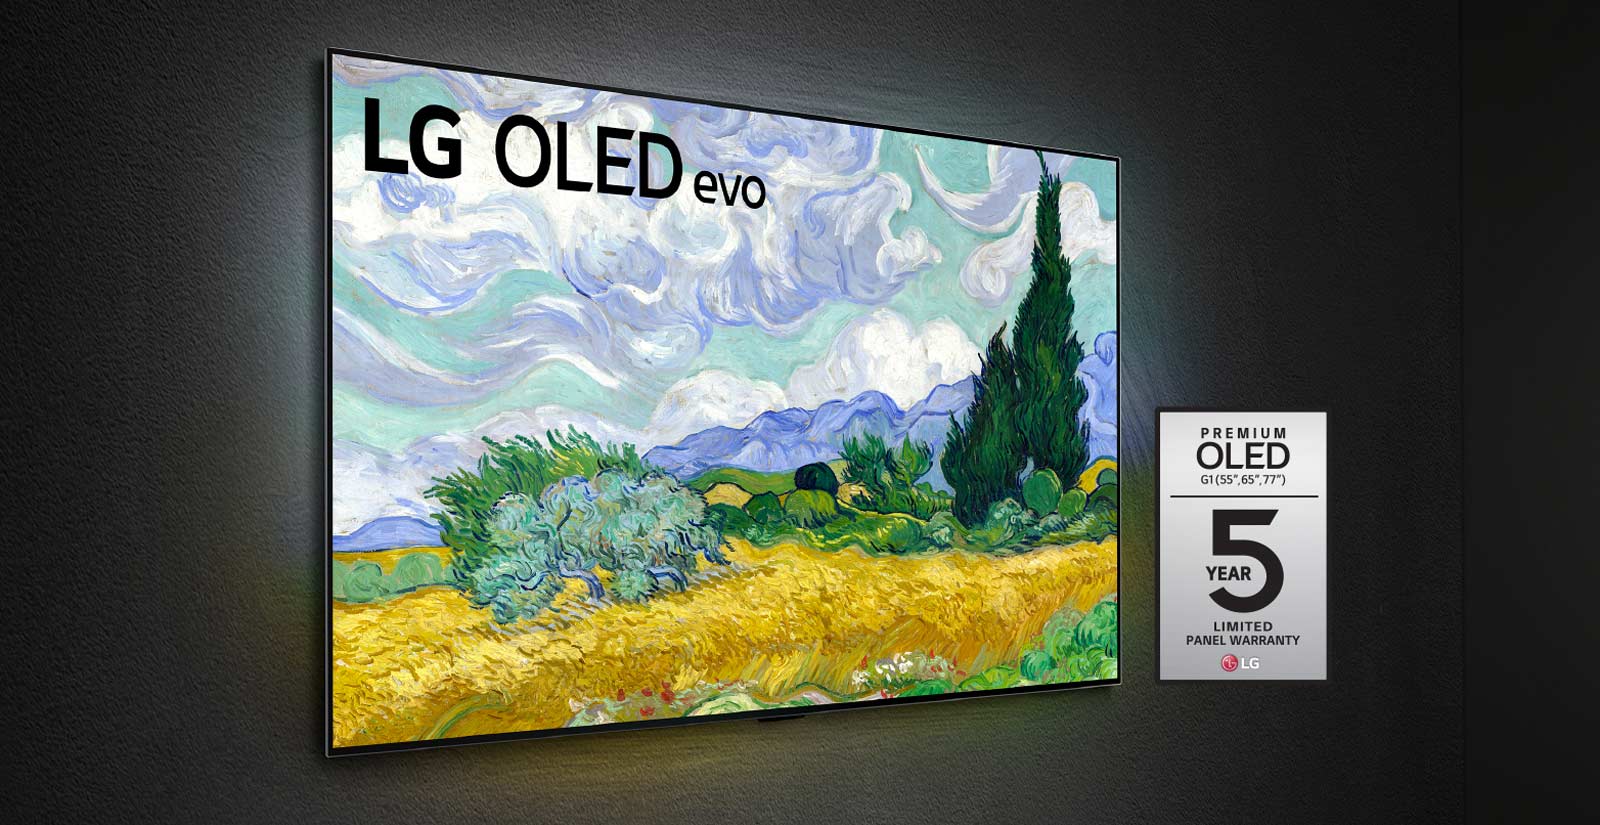 LG OLED evo TV with 5 year limited warranty on LG OLED evo G1 panel icon 